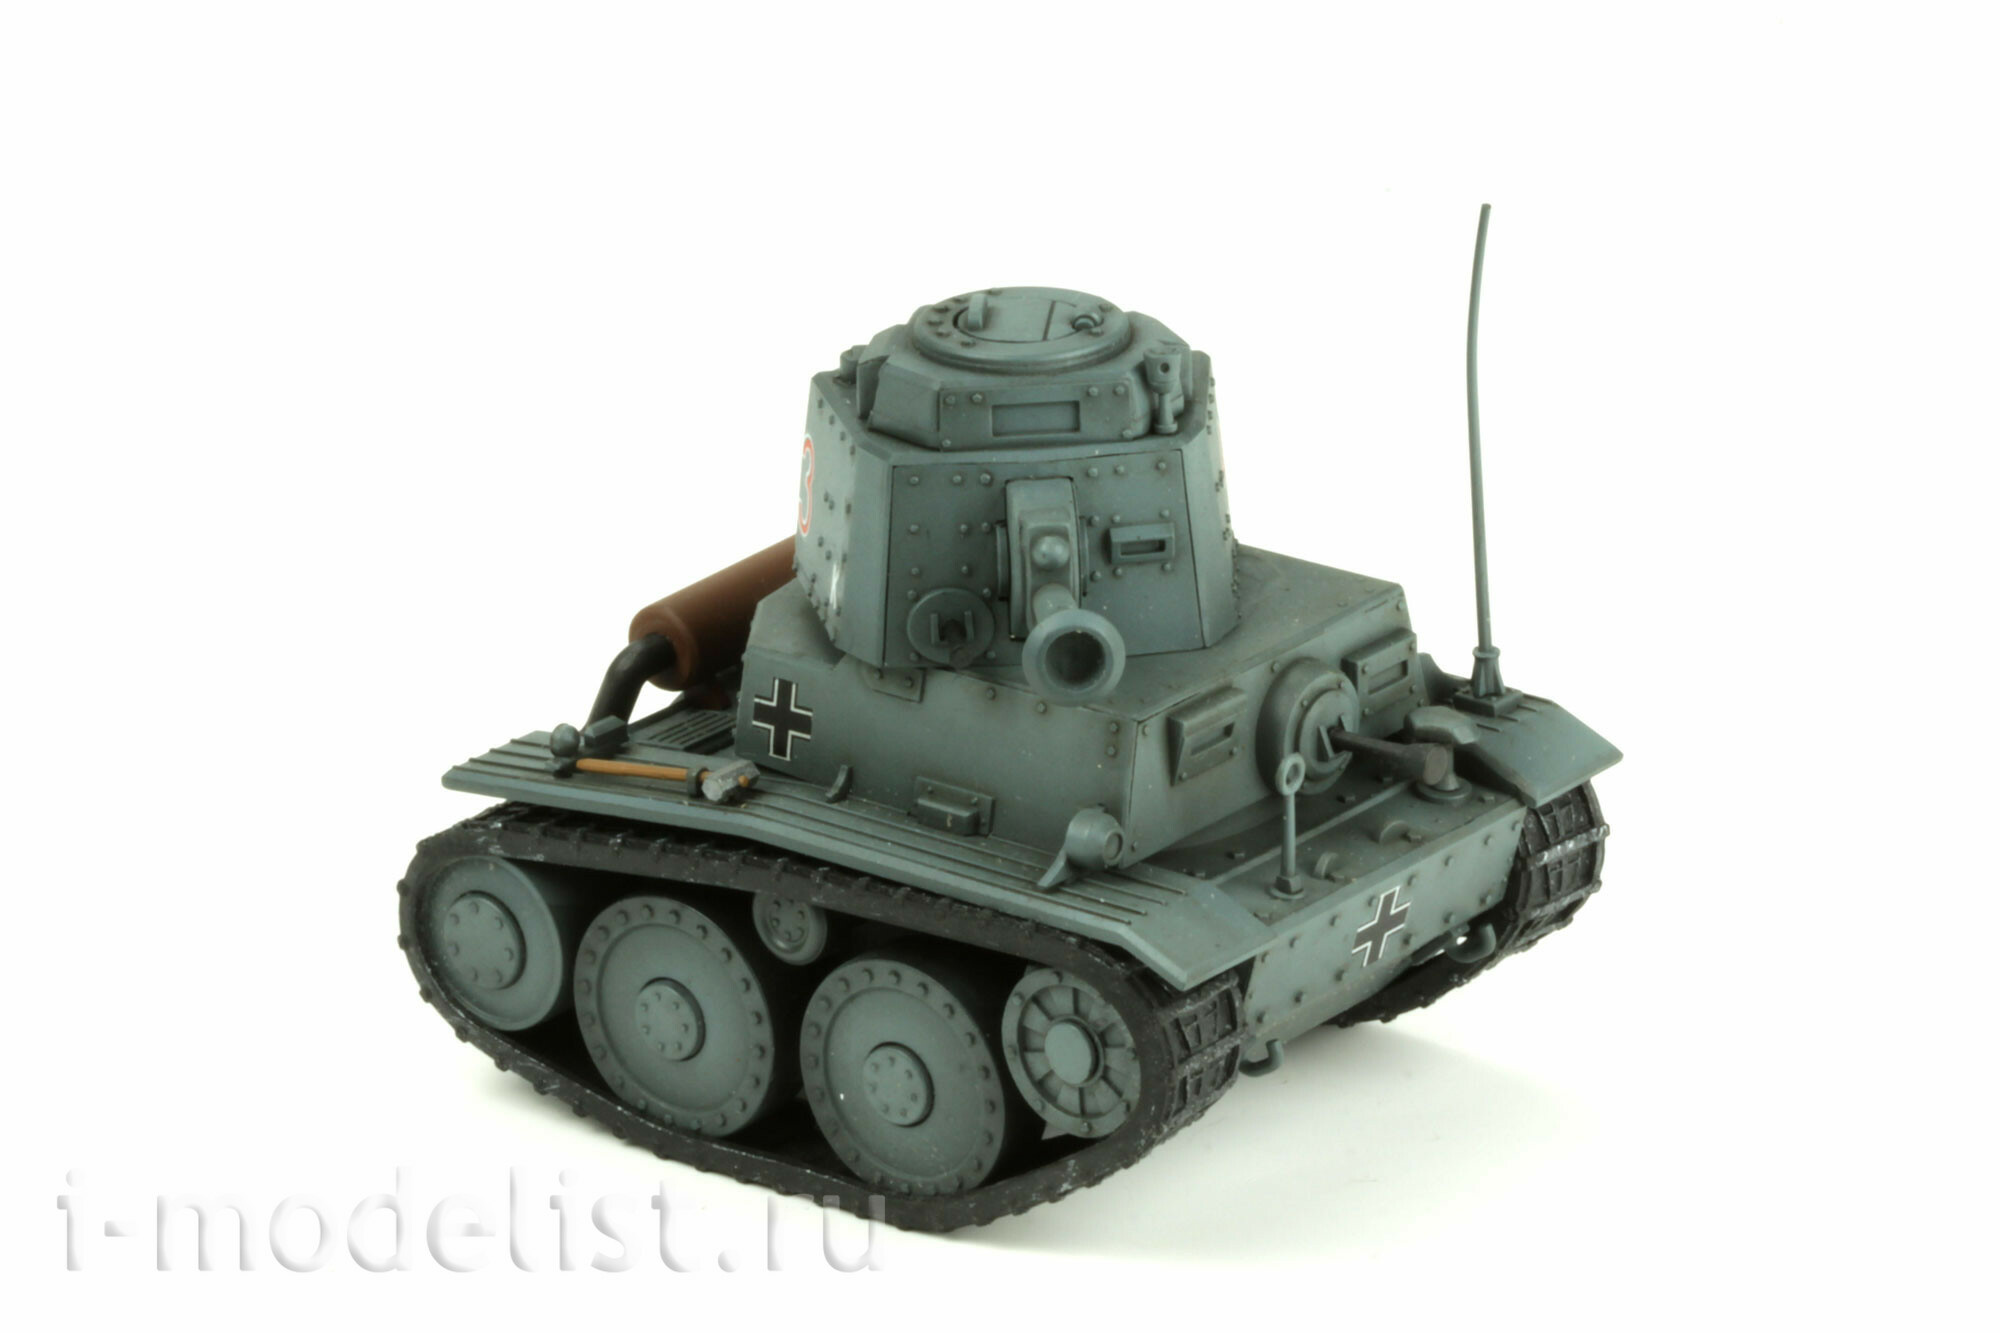 WWT-011 Meng German Light Tank Panzer 38T